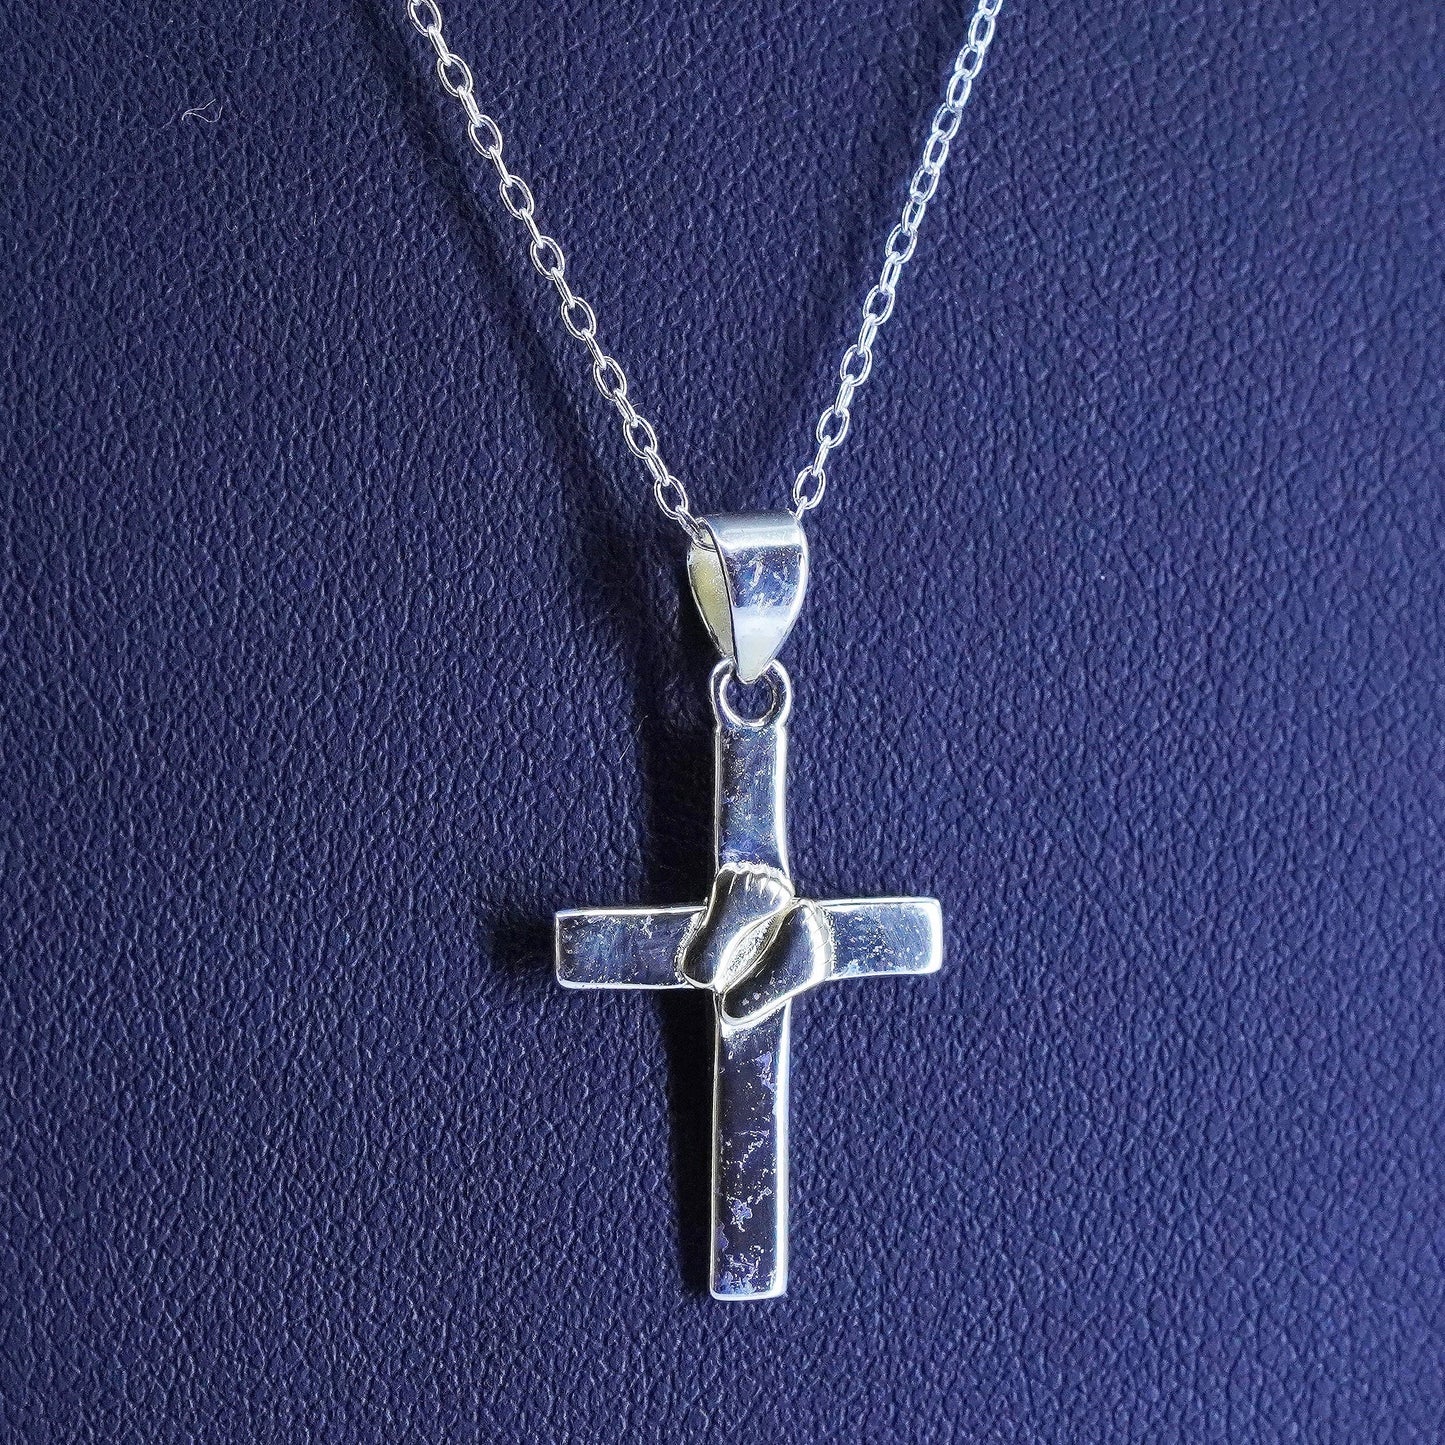 18”, VTG sterling silver flatten circle link necklace cross pendant footprint